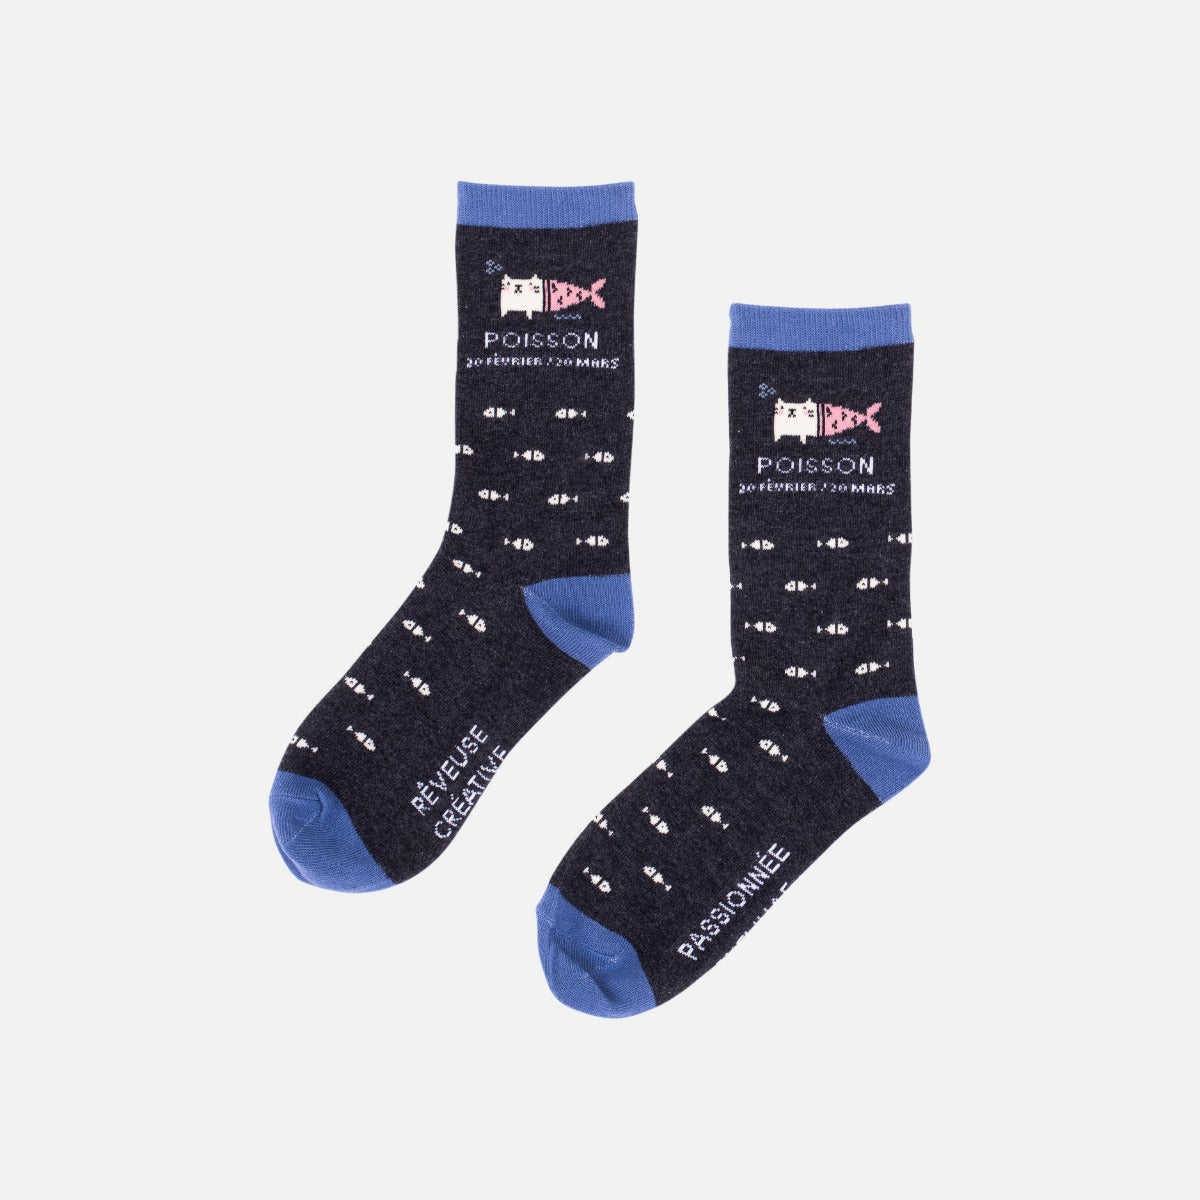 Grey and blue socks astrological sign "pisces"